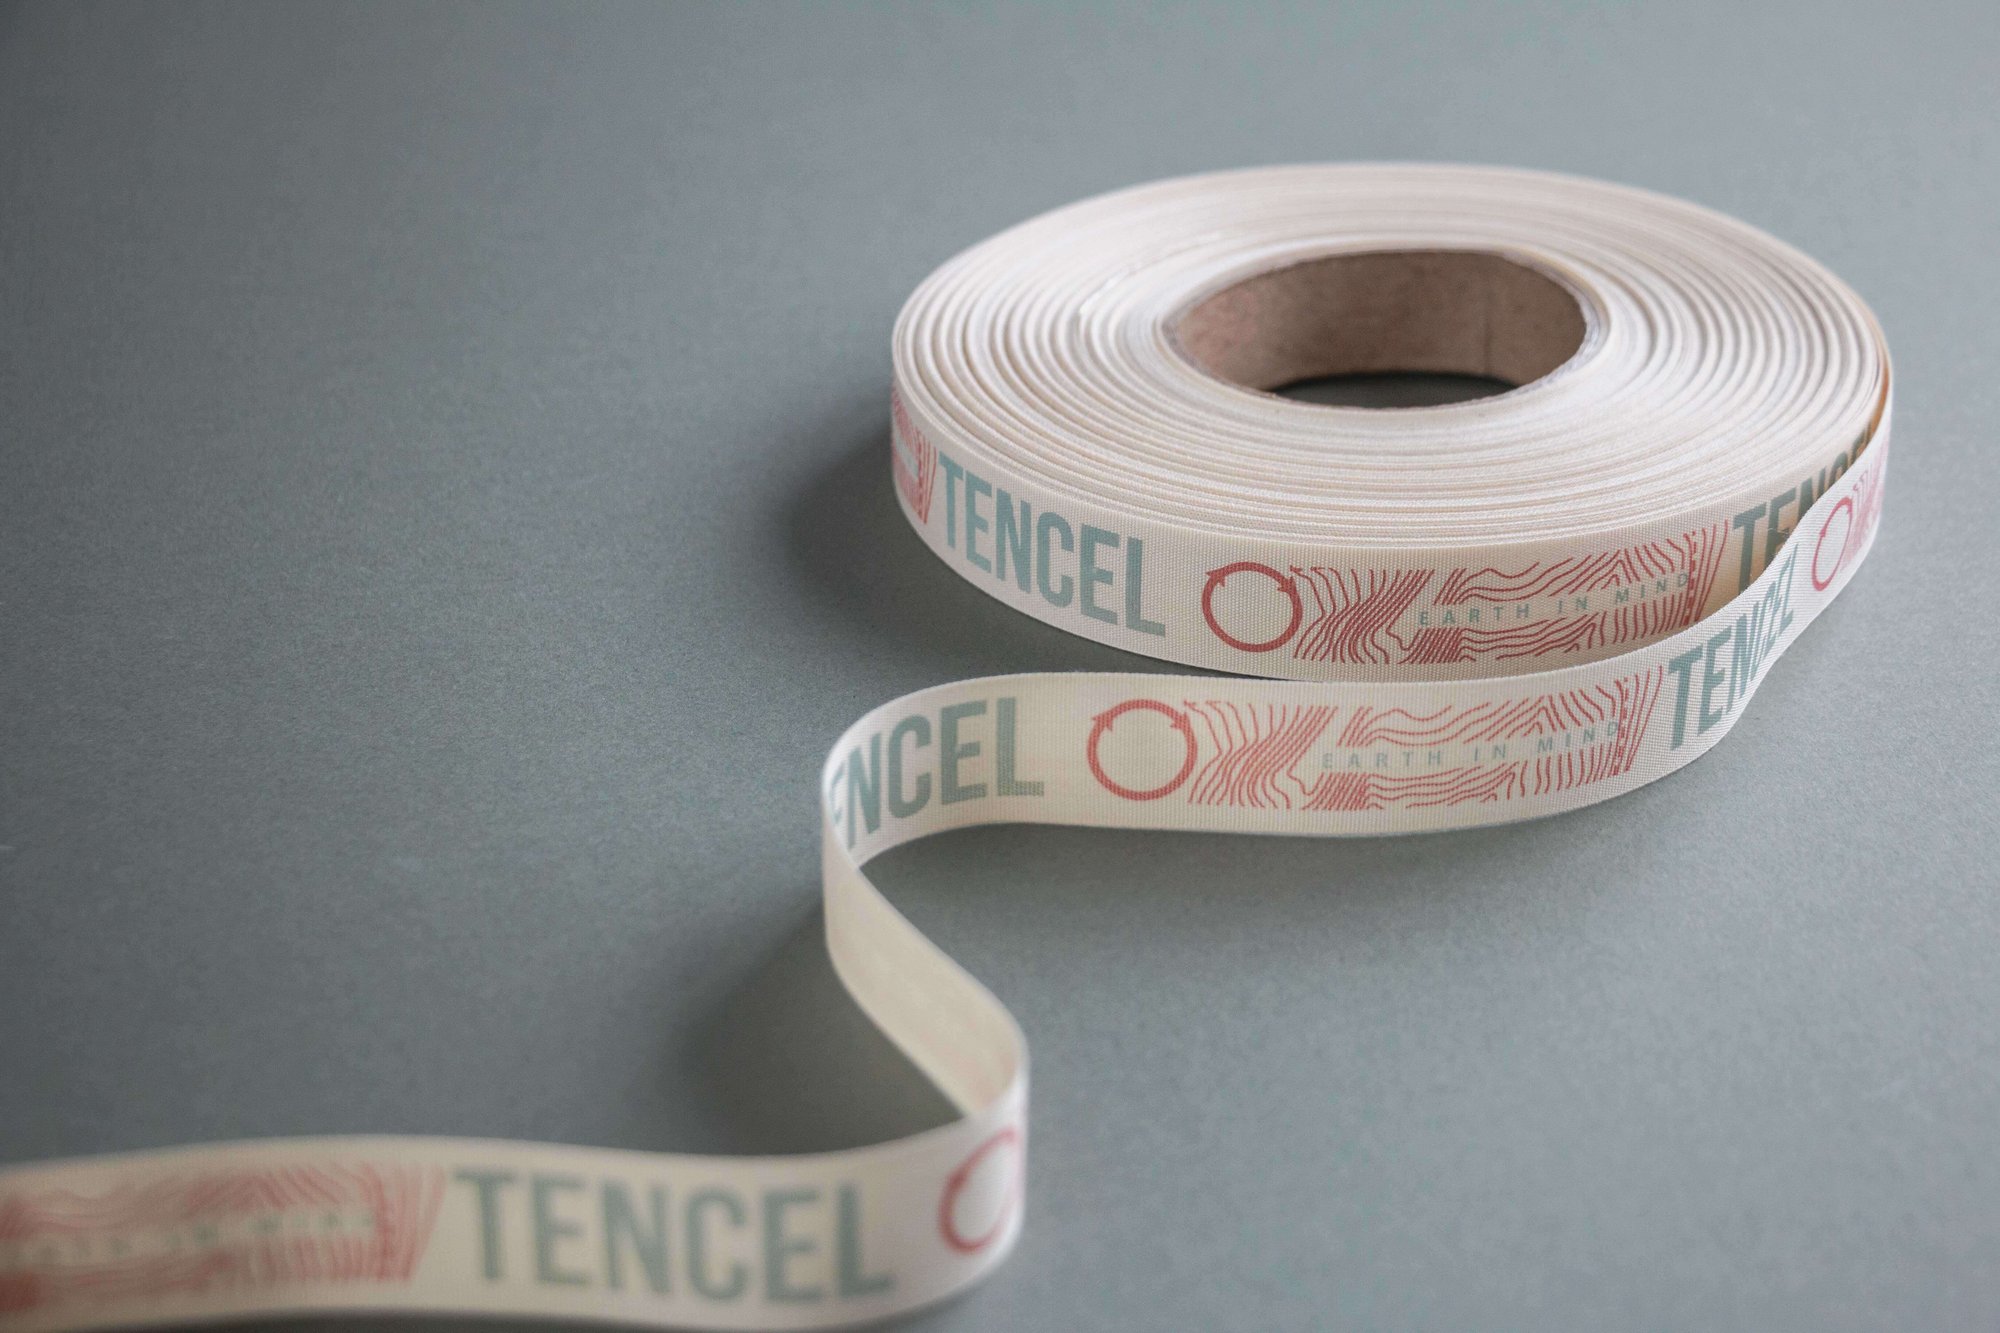 Tencel tape